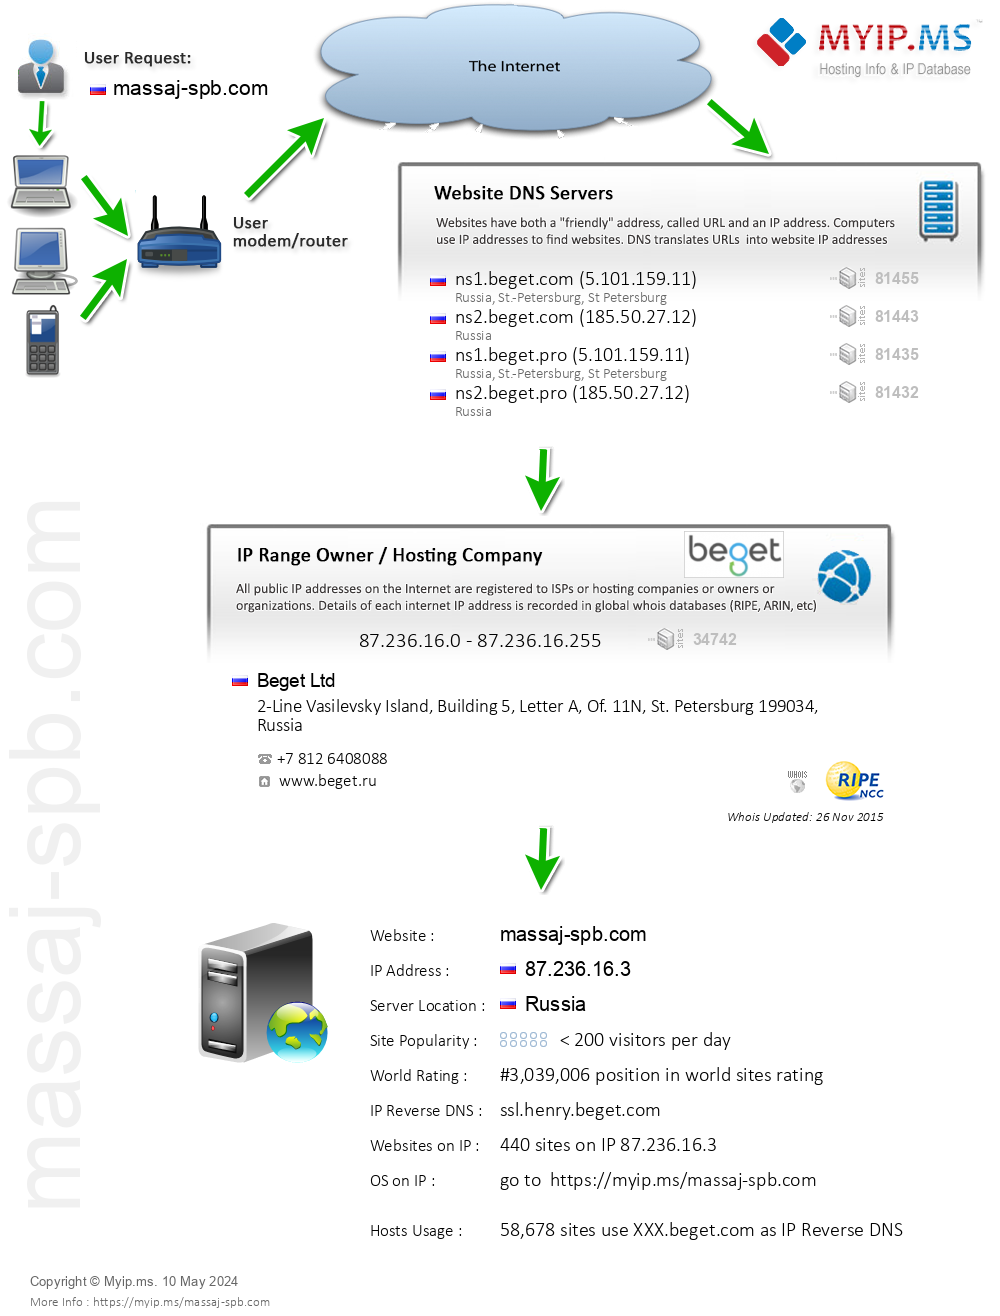 Massaj-spb.com - Website Hosting Visual IP Diagram